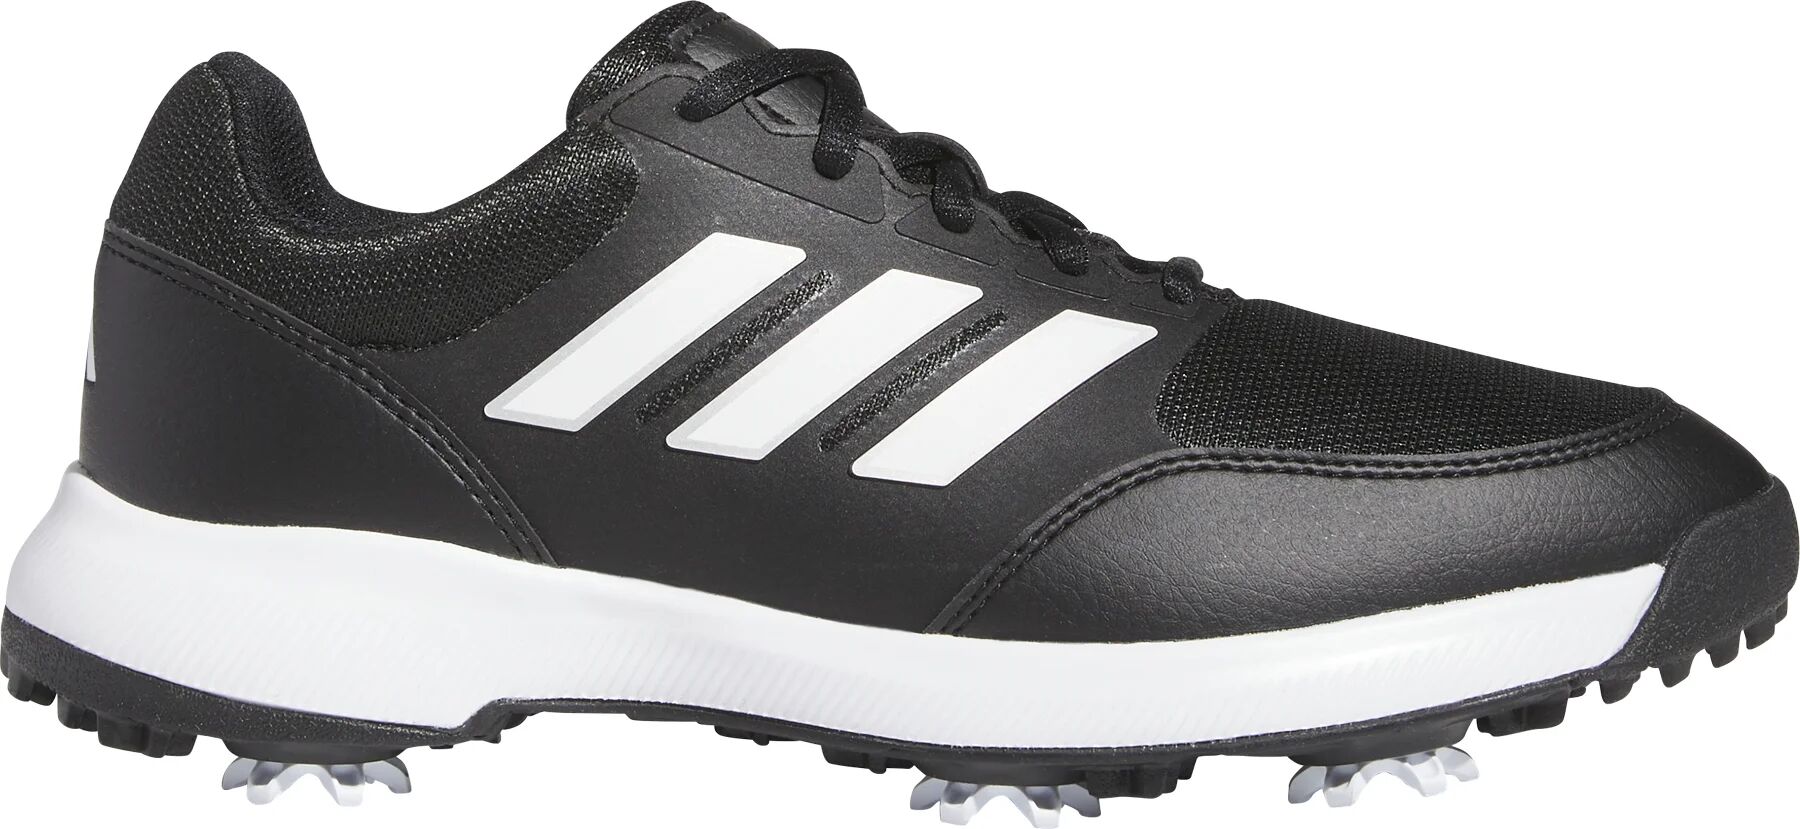 adidas Womens Tech Response 3.0 Golf Shoes - Core Black/Cloud White/Silver Metallic - 10 - MEDIUM